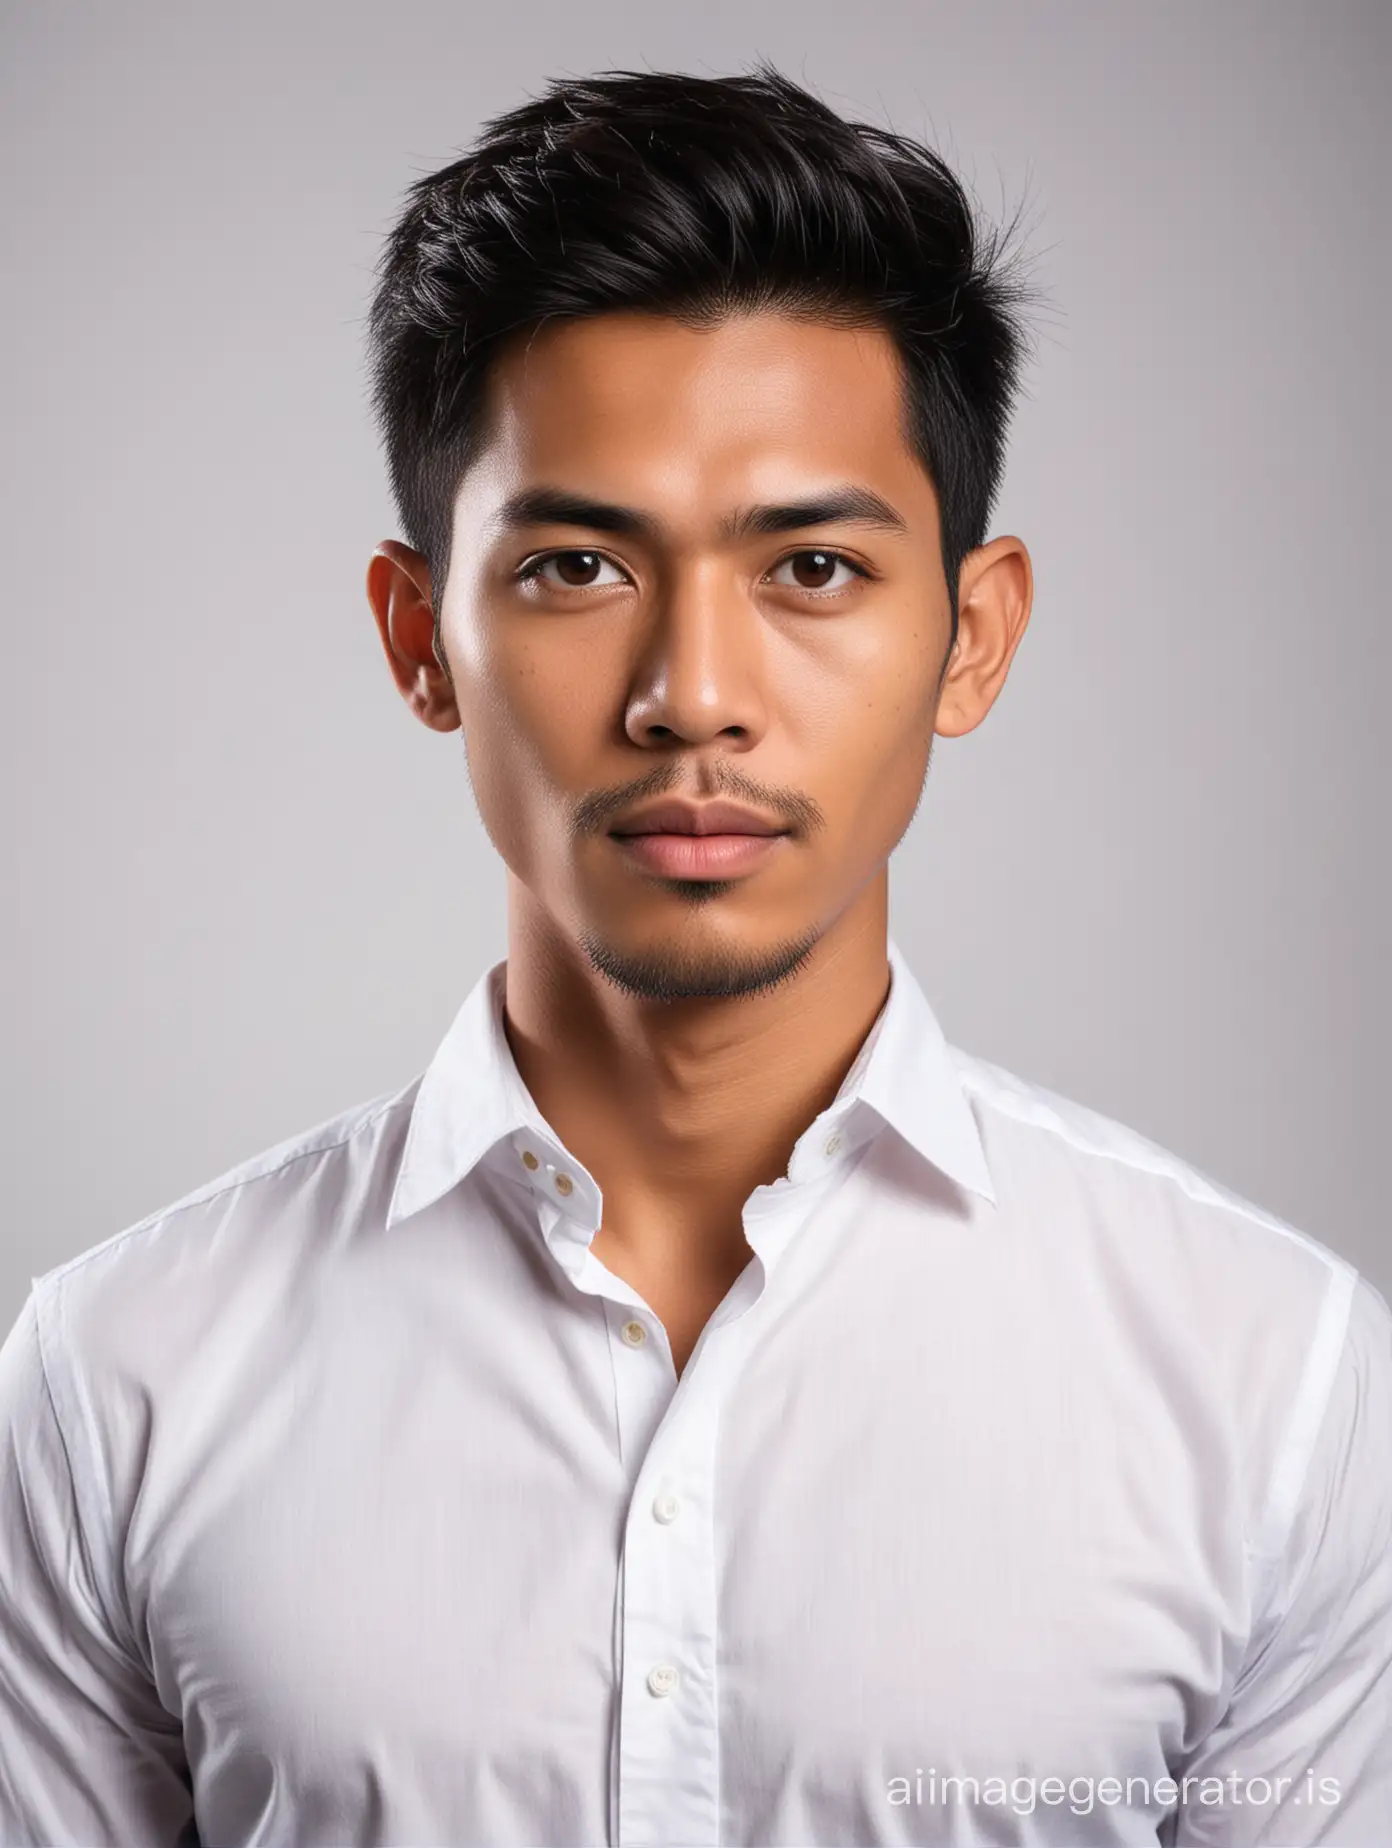 Indonesian-Gentleman-in-Formal-White-Shirt-for-Passport-Photo